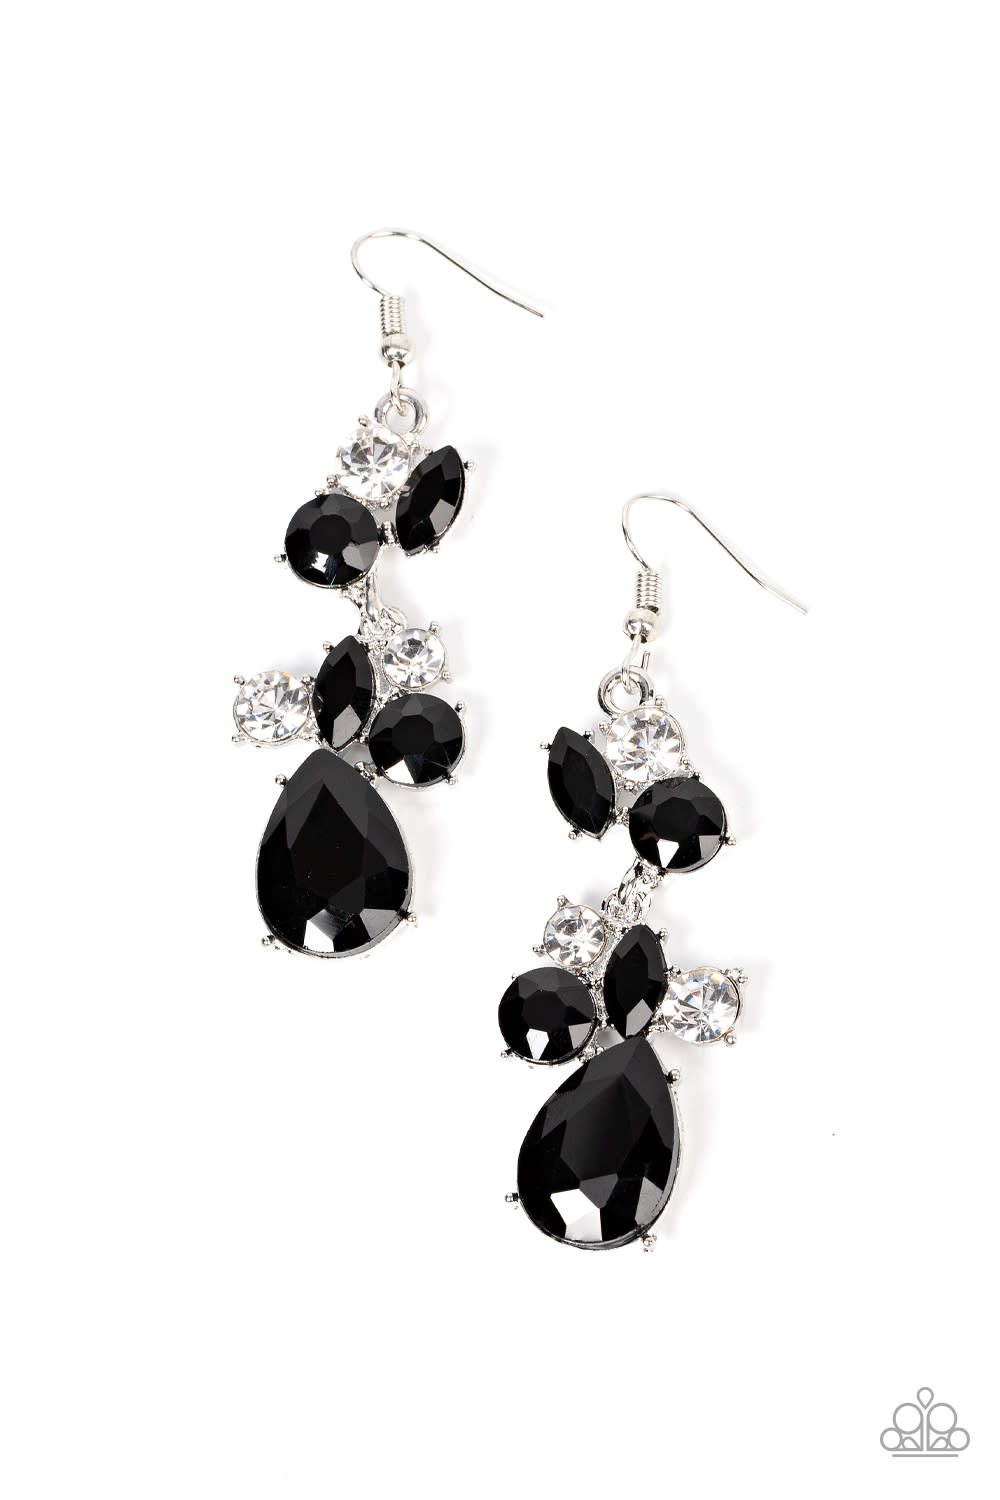 Rhinestone Reveler Black Rhinestone Earrings - Paparazzi Accessories- lightbox - CarasShop.com - $5 Jewelry by Cara Jewels